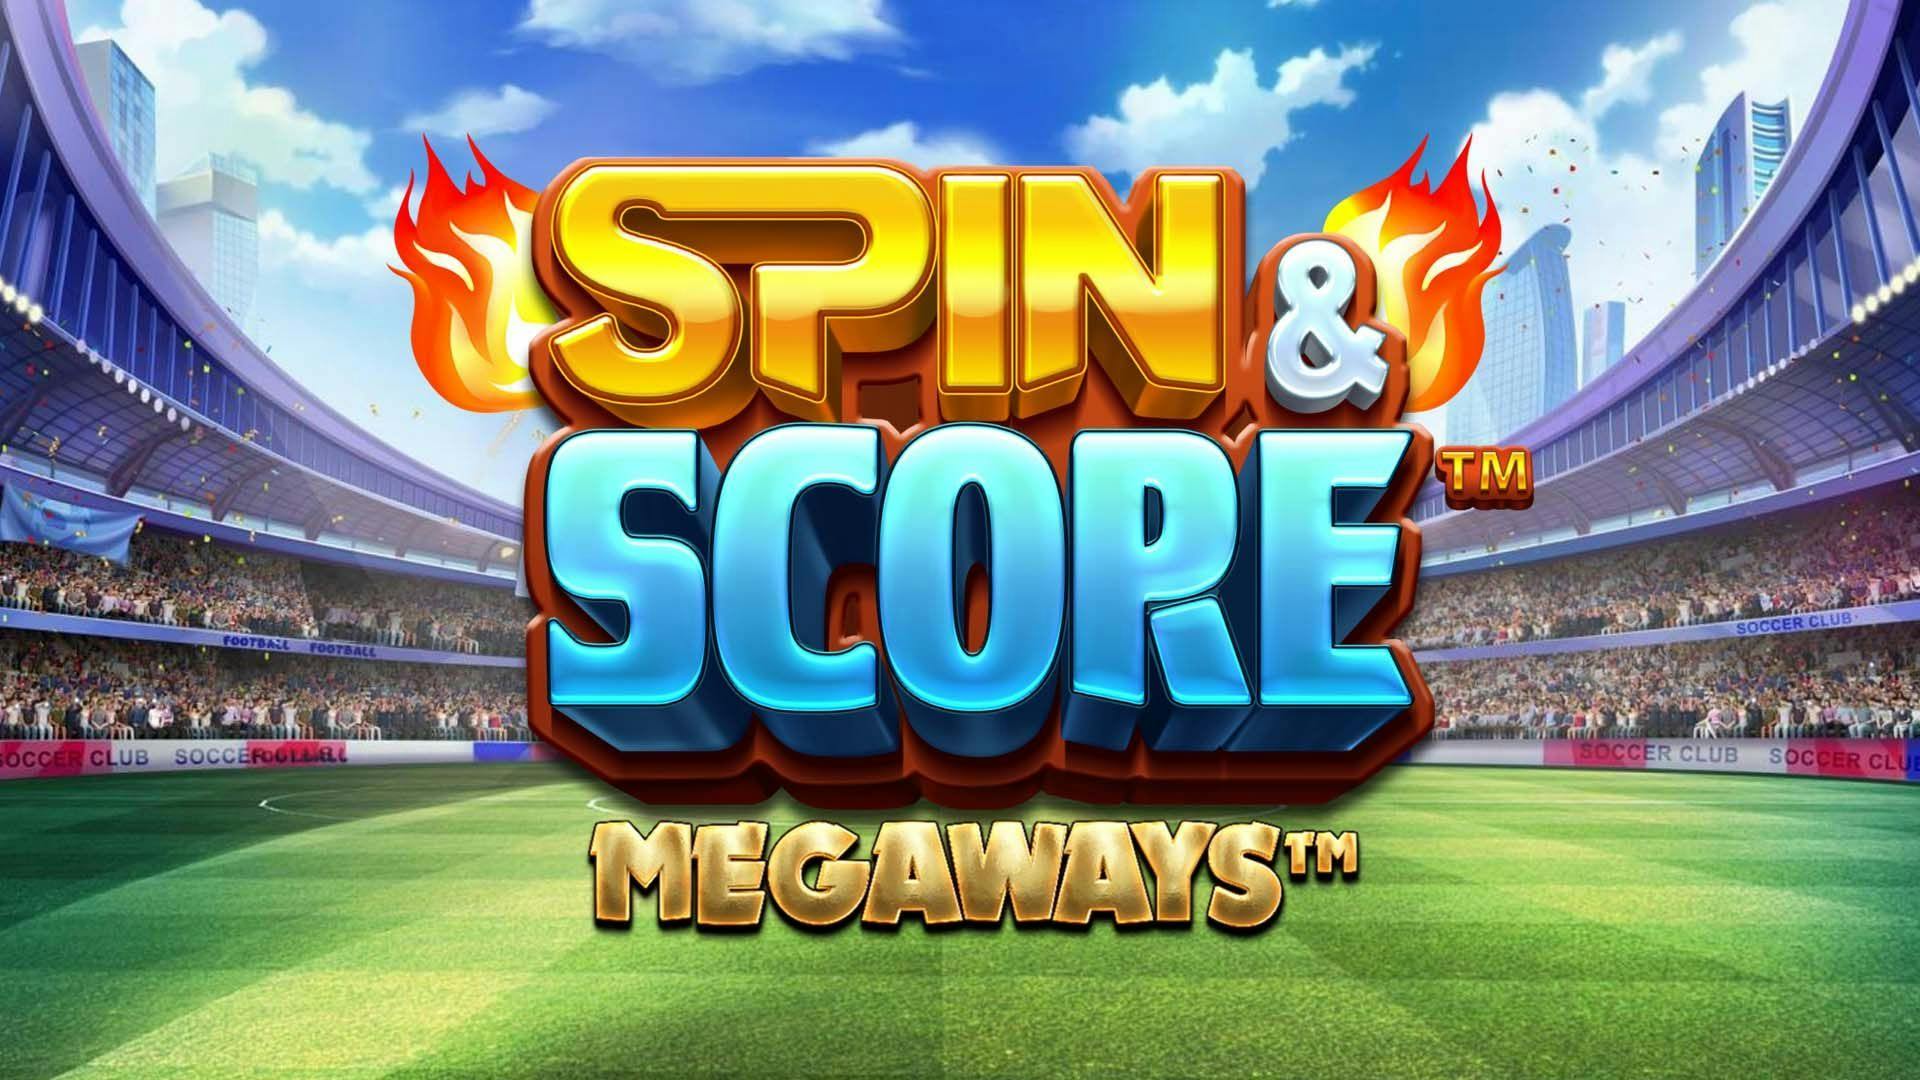 Spin & Score Megaways Slot Machine Online Free Game Play